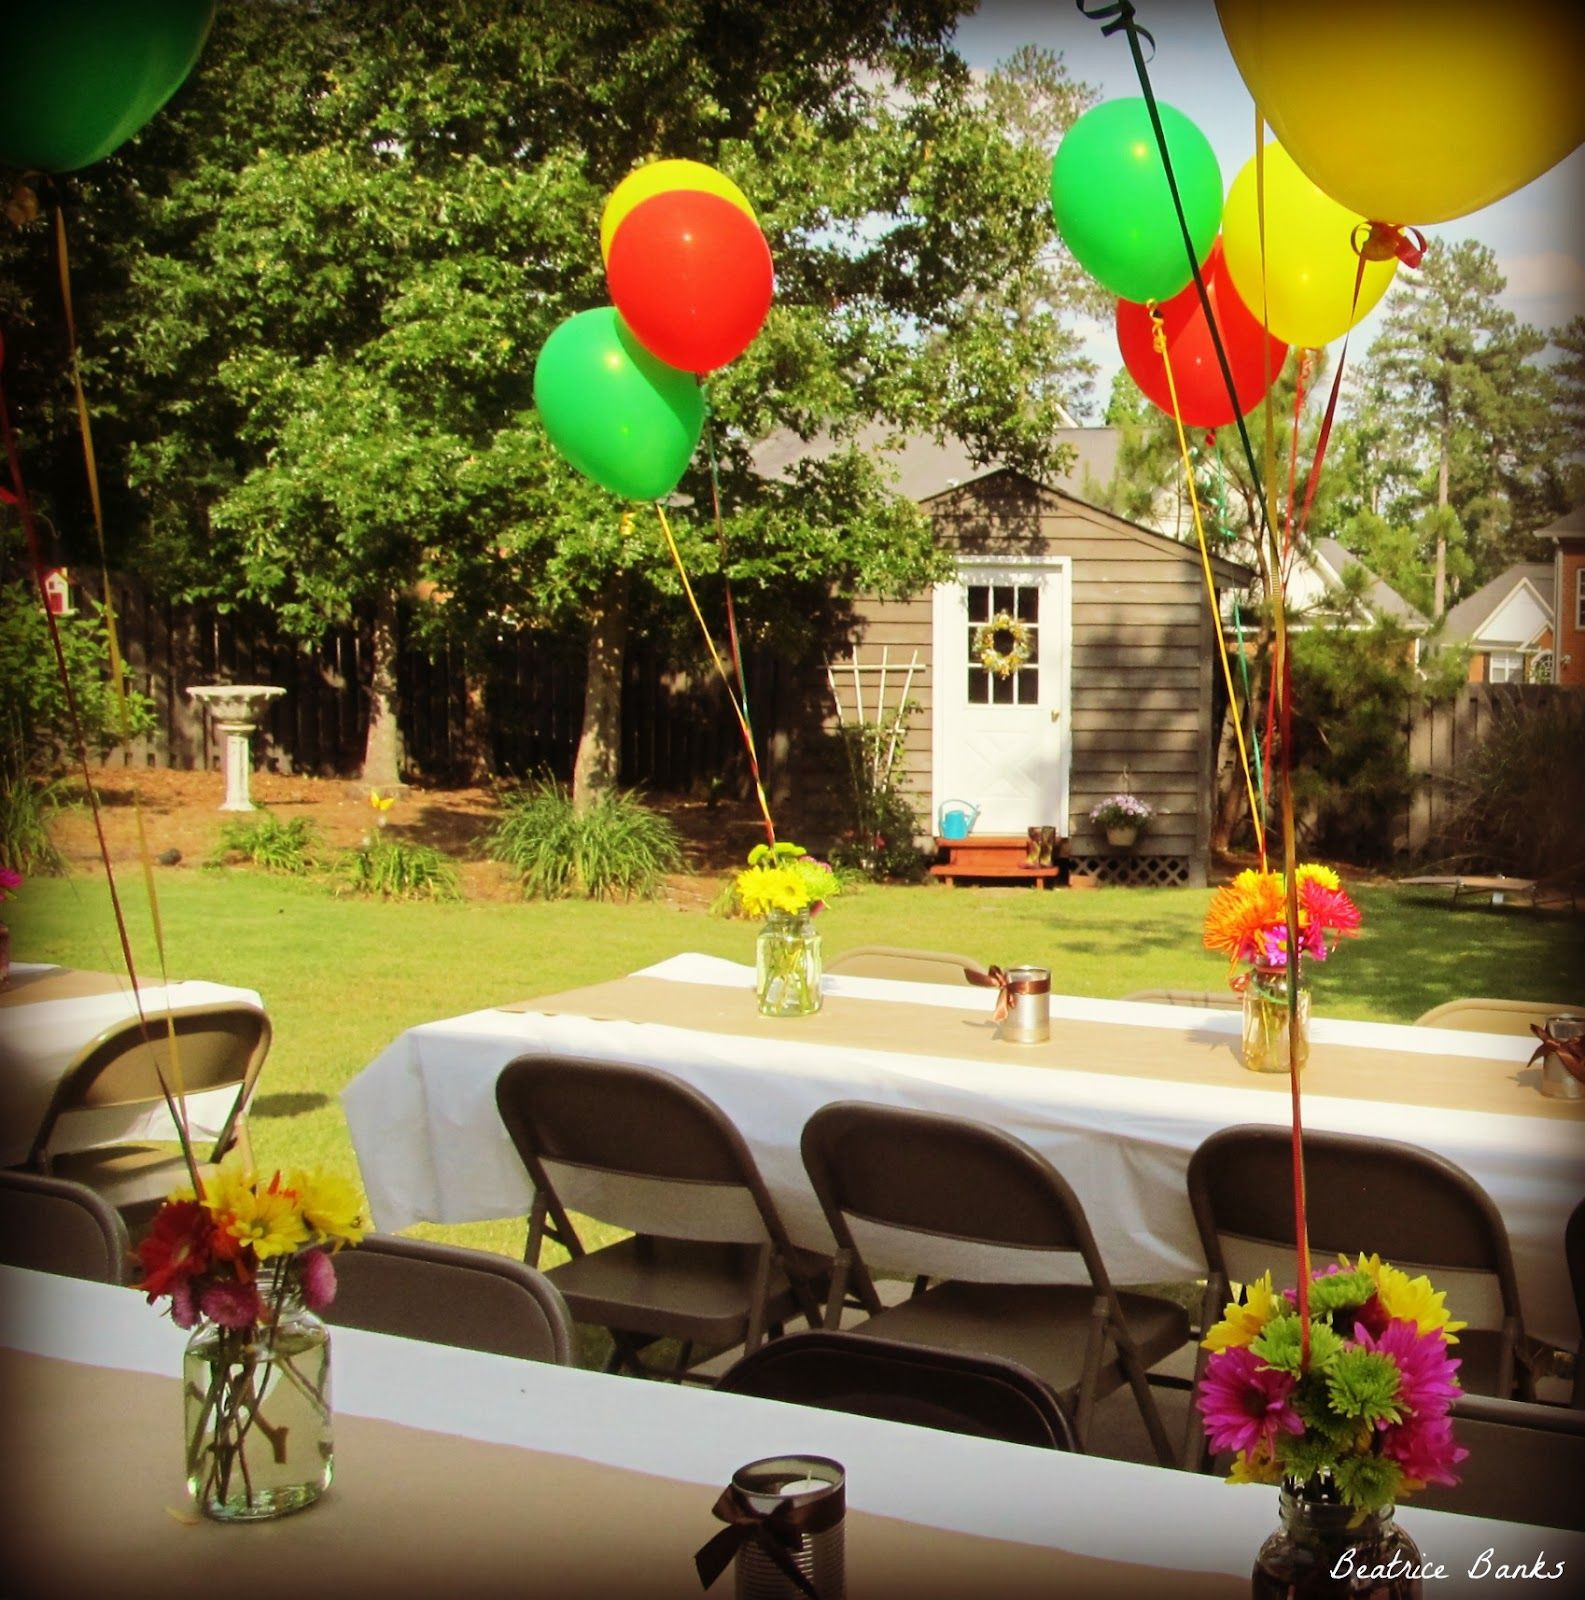 Graduation Party Ideas In The Backyard
 Backyard Graduation Party Beatrice Banks